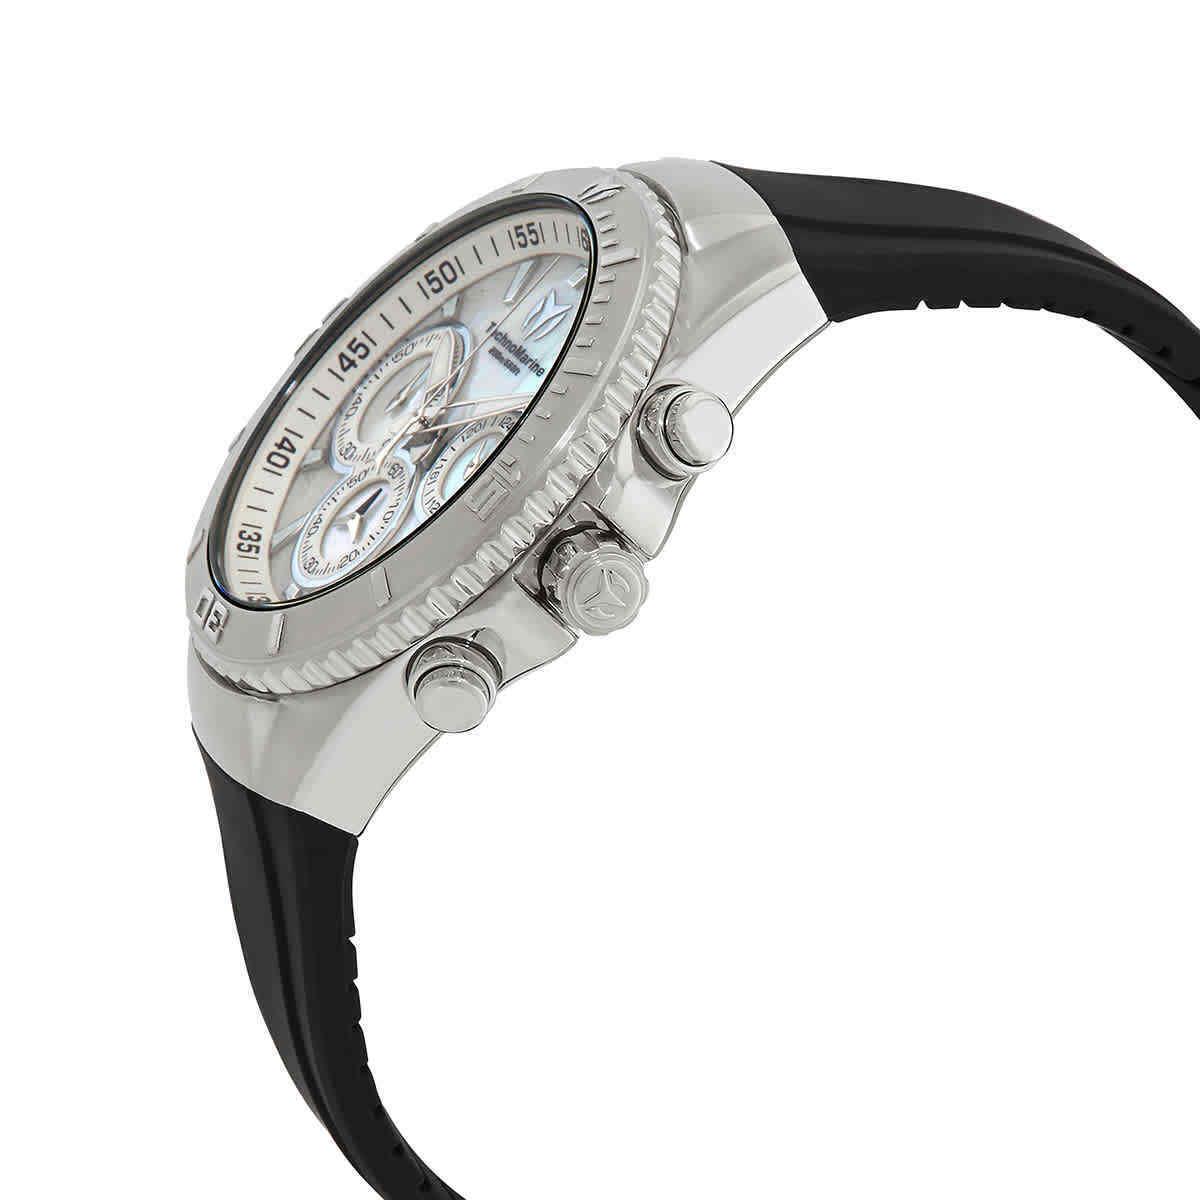 Technomarine Sea Manta Chronograph Gmt Quartz Unisex Watch TM-220070 - Dial: Mother of Pearl, Band: Black, Bezel: Silver-tone